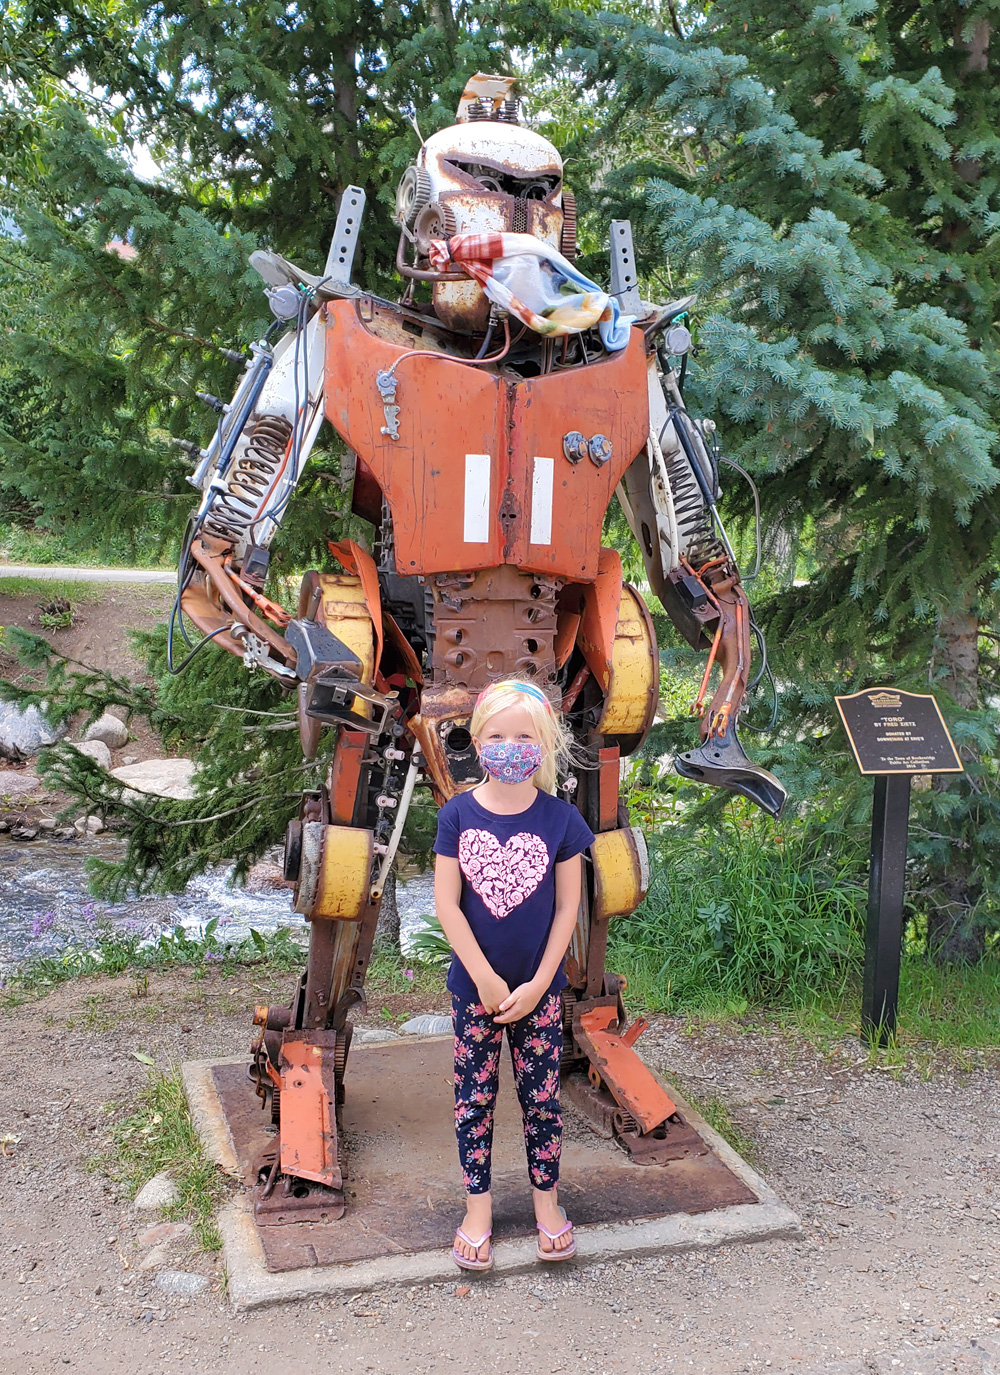 Robot art sculpture in downtown Breckenridge, Colorado